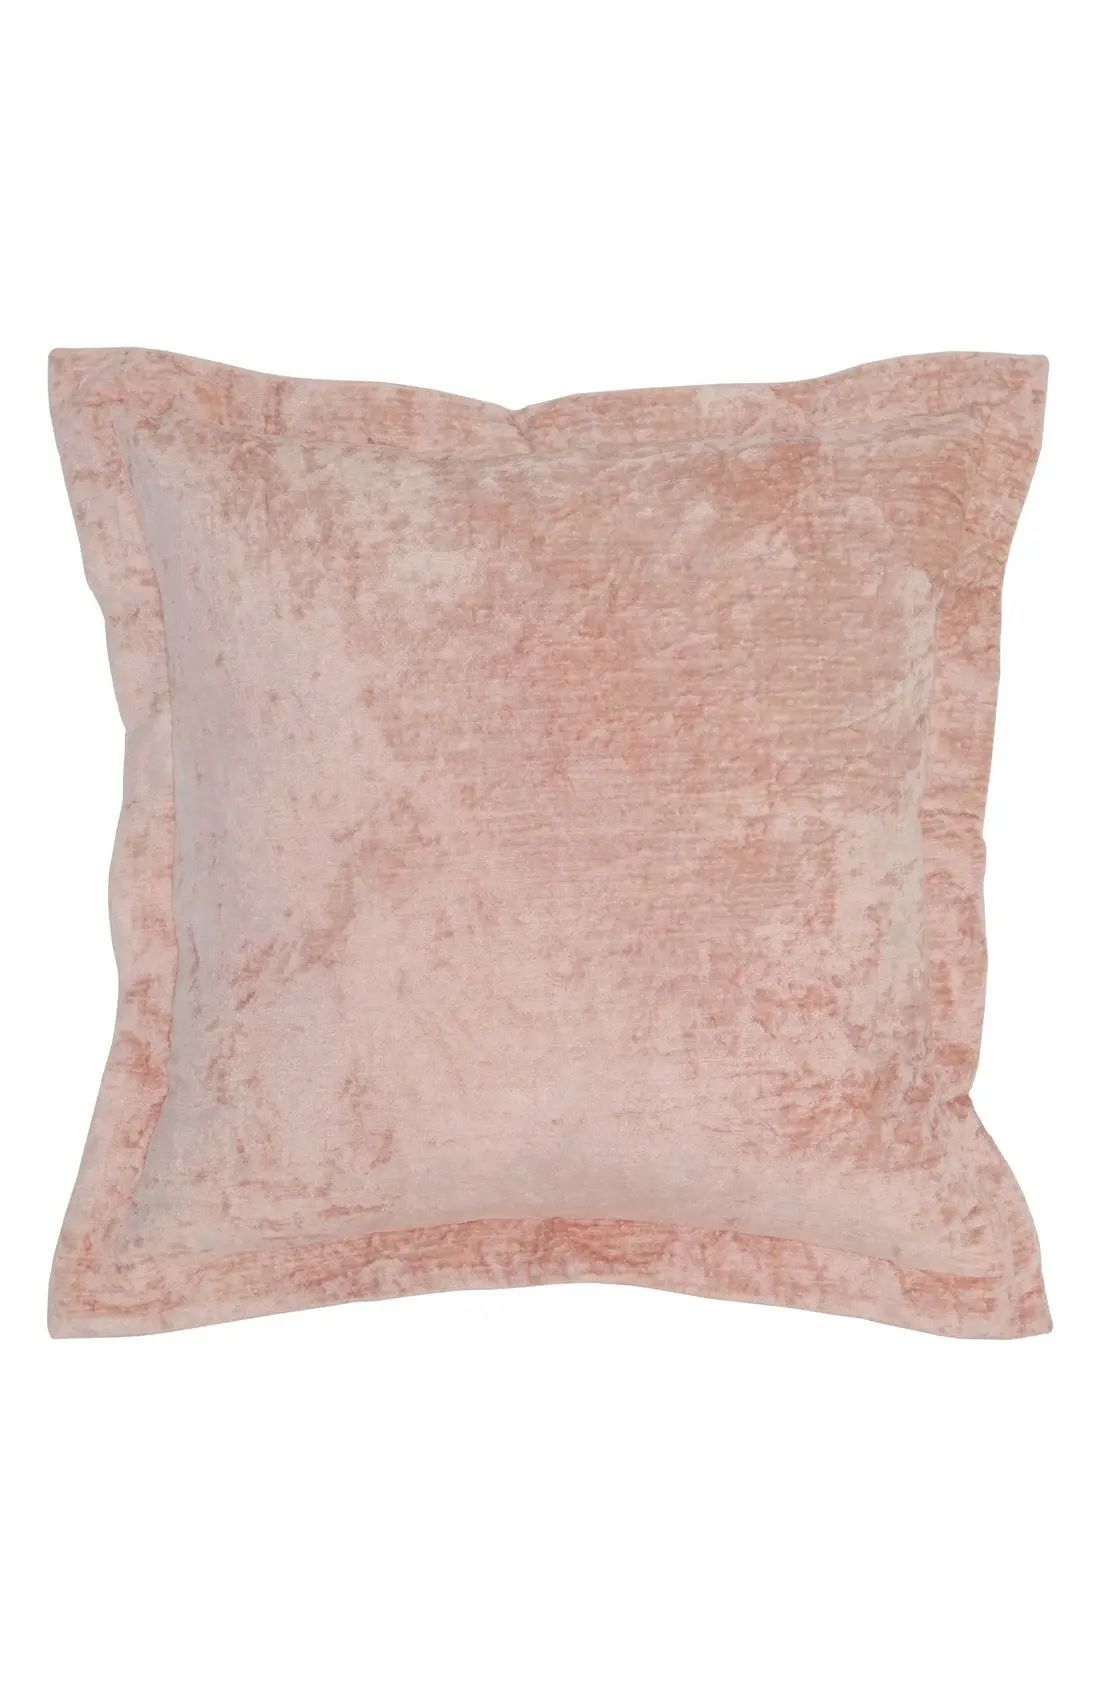 'Lapis' Decorative Pillow | Nordstrom